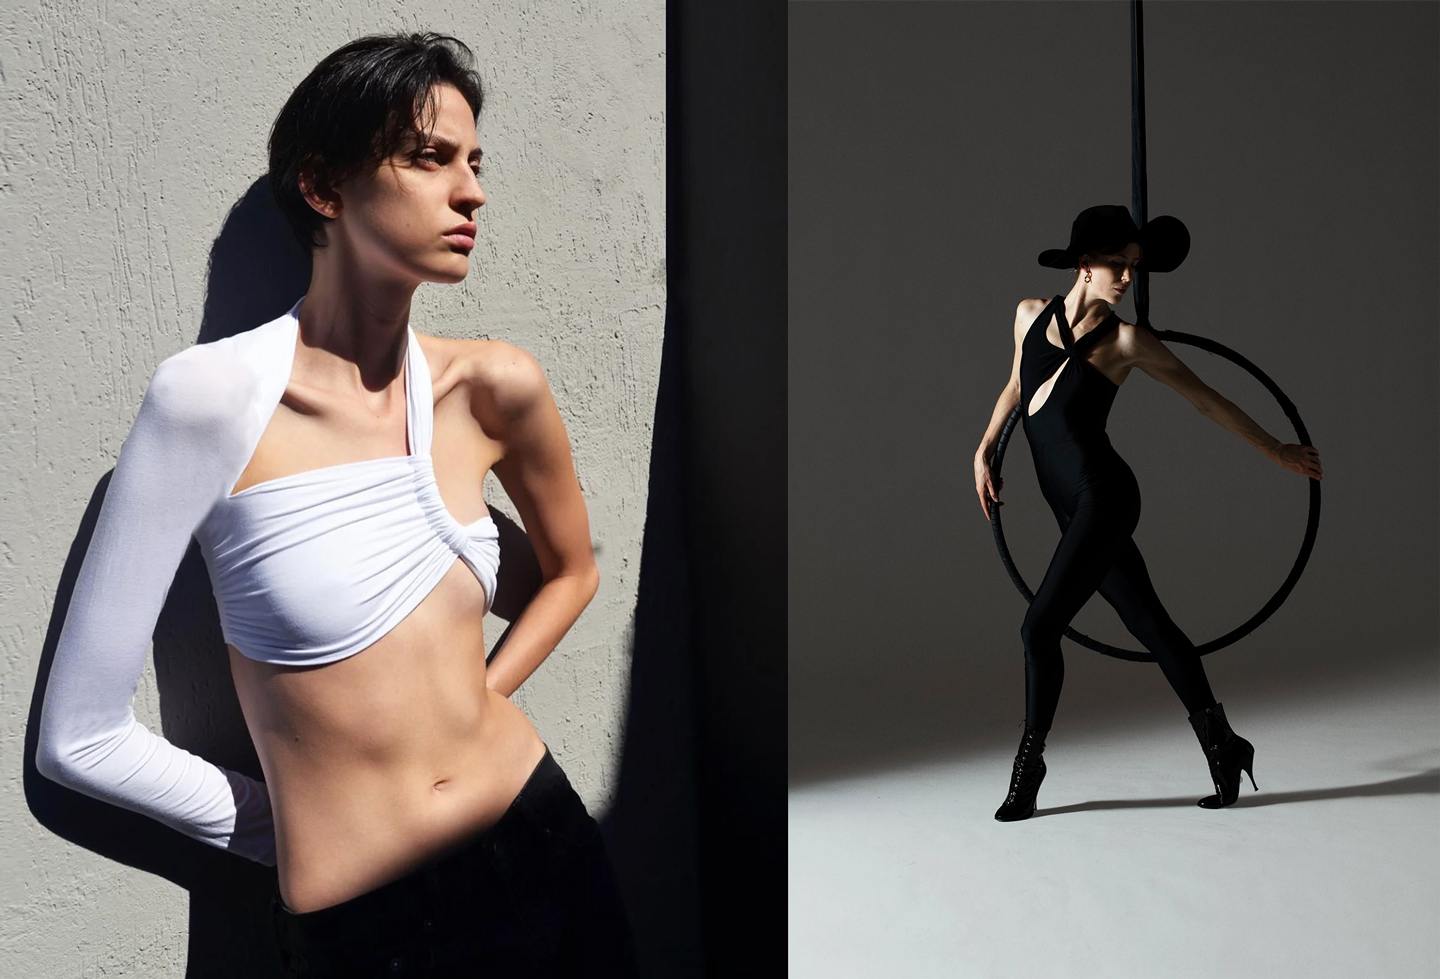 Creations by Istituto Marangoni Fashion Design alumna Sofia Bianchi's Soubi Studios, an eco-friendly brand and studio creating elevated skin-wear in London